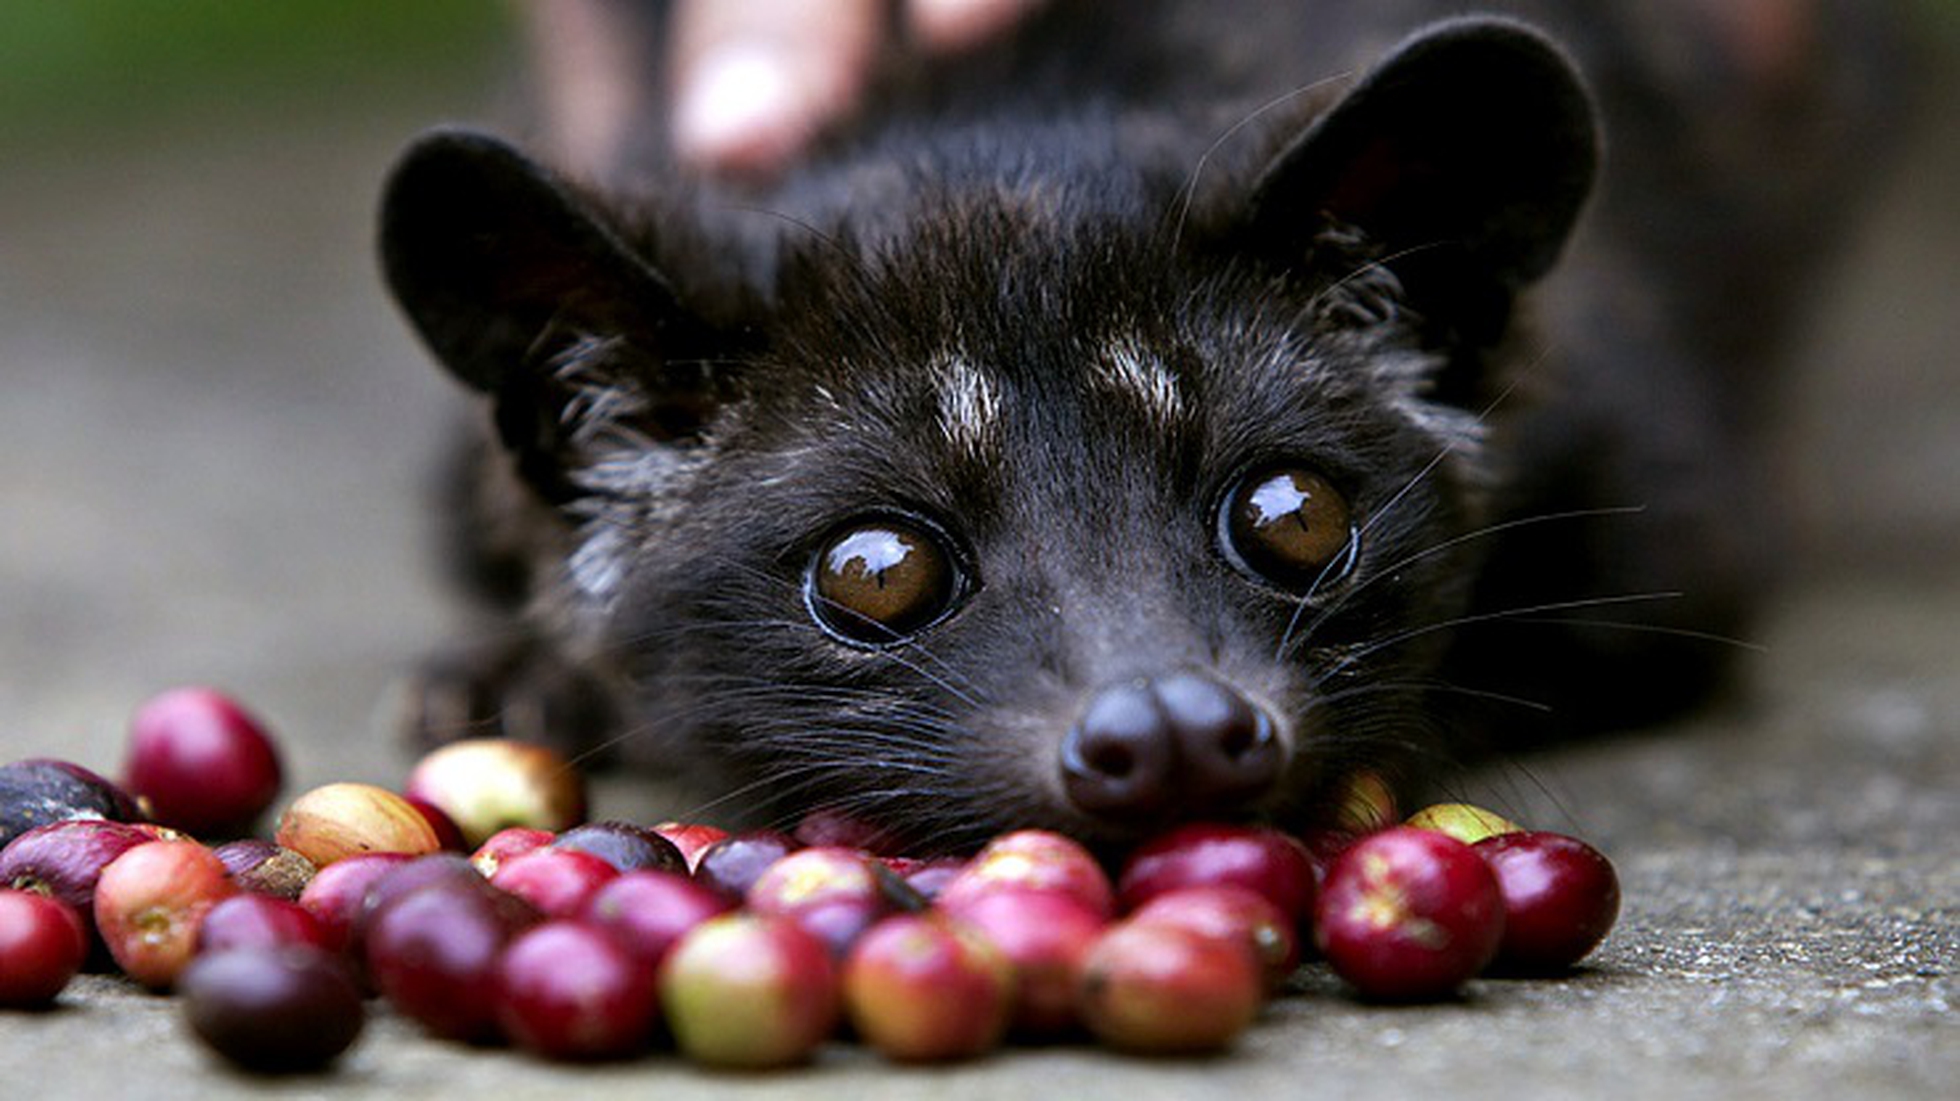 Kopi Luwak Or Civet Coffee The World S Most Expensive Brew Kills Asian Palm Civets Lifegate